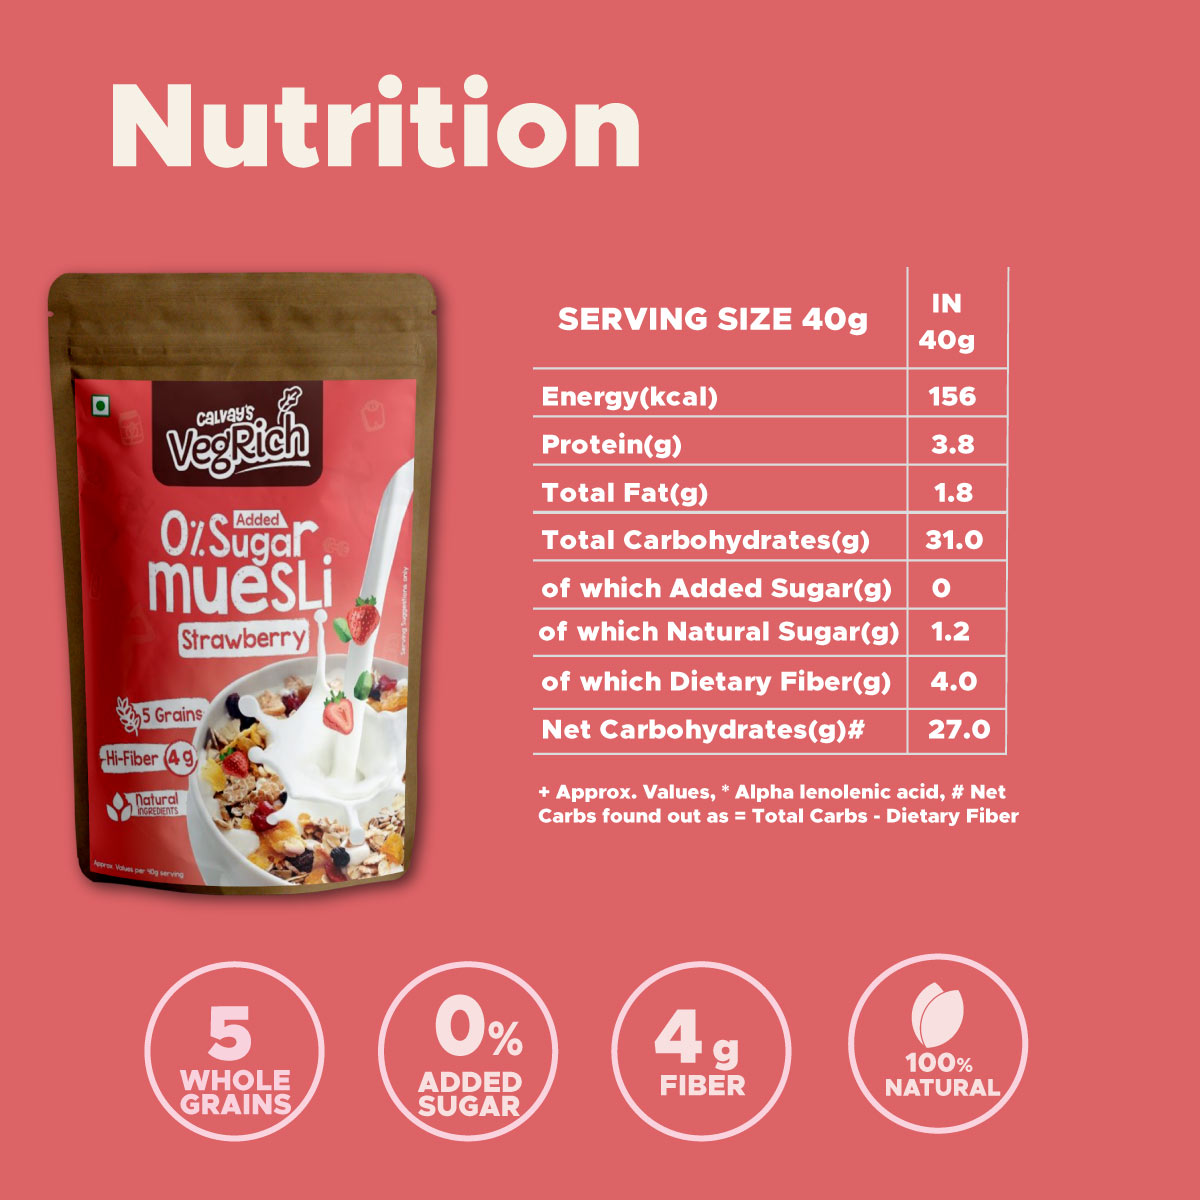 Nutrition information for calvays zero sugar strawberry muesli